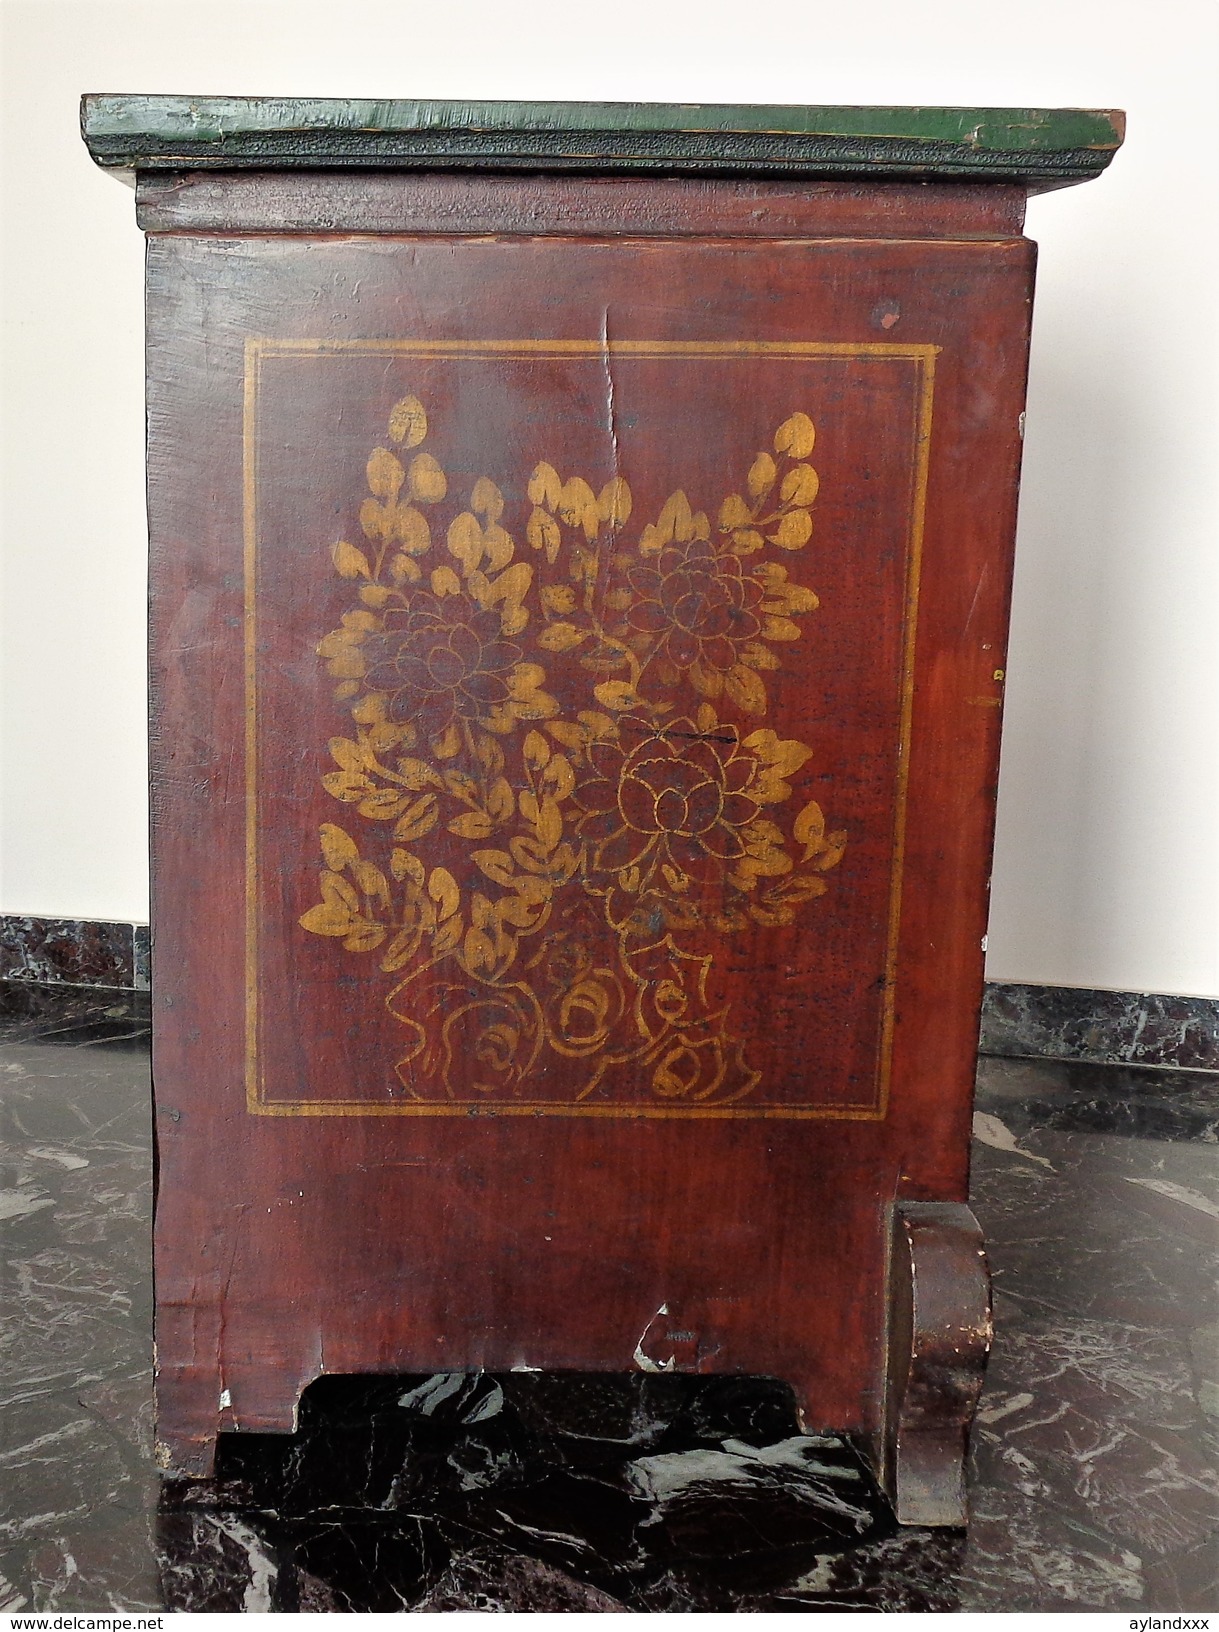 Tibetan antique painted wood cabinet